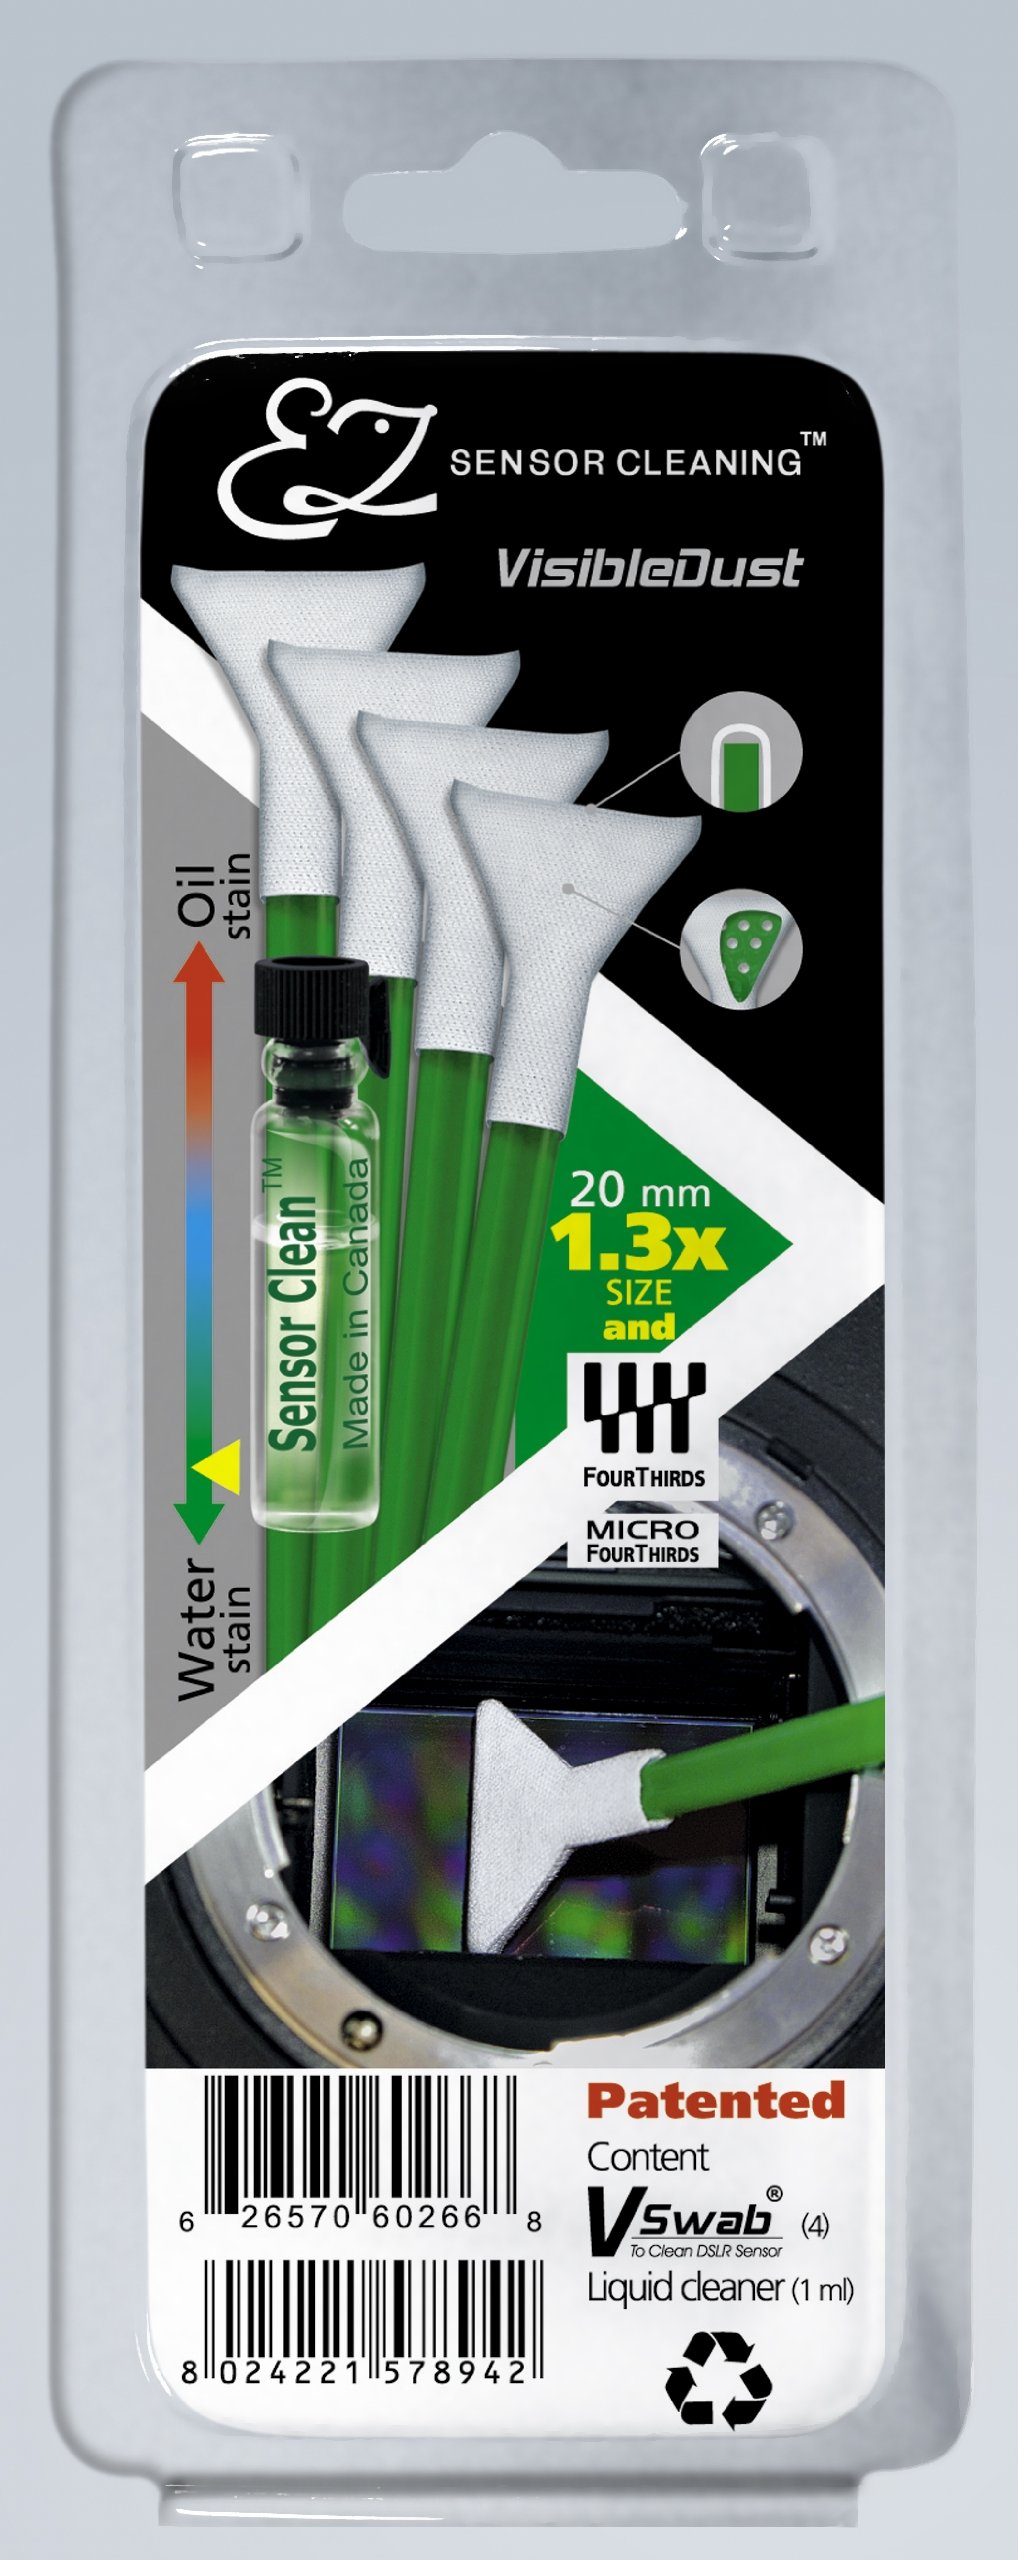 VisibleDust grüne Serie EZ Sensor Cleaning Kit - 4X VSwabs 1.3X und 1ml Sensor Clean